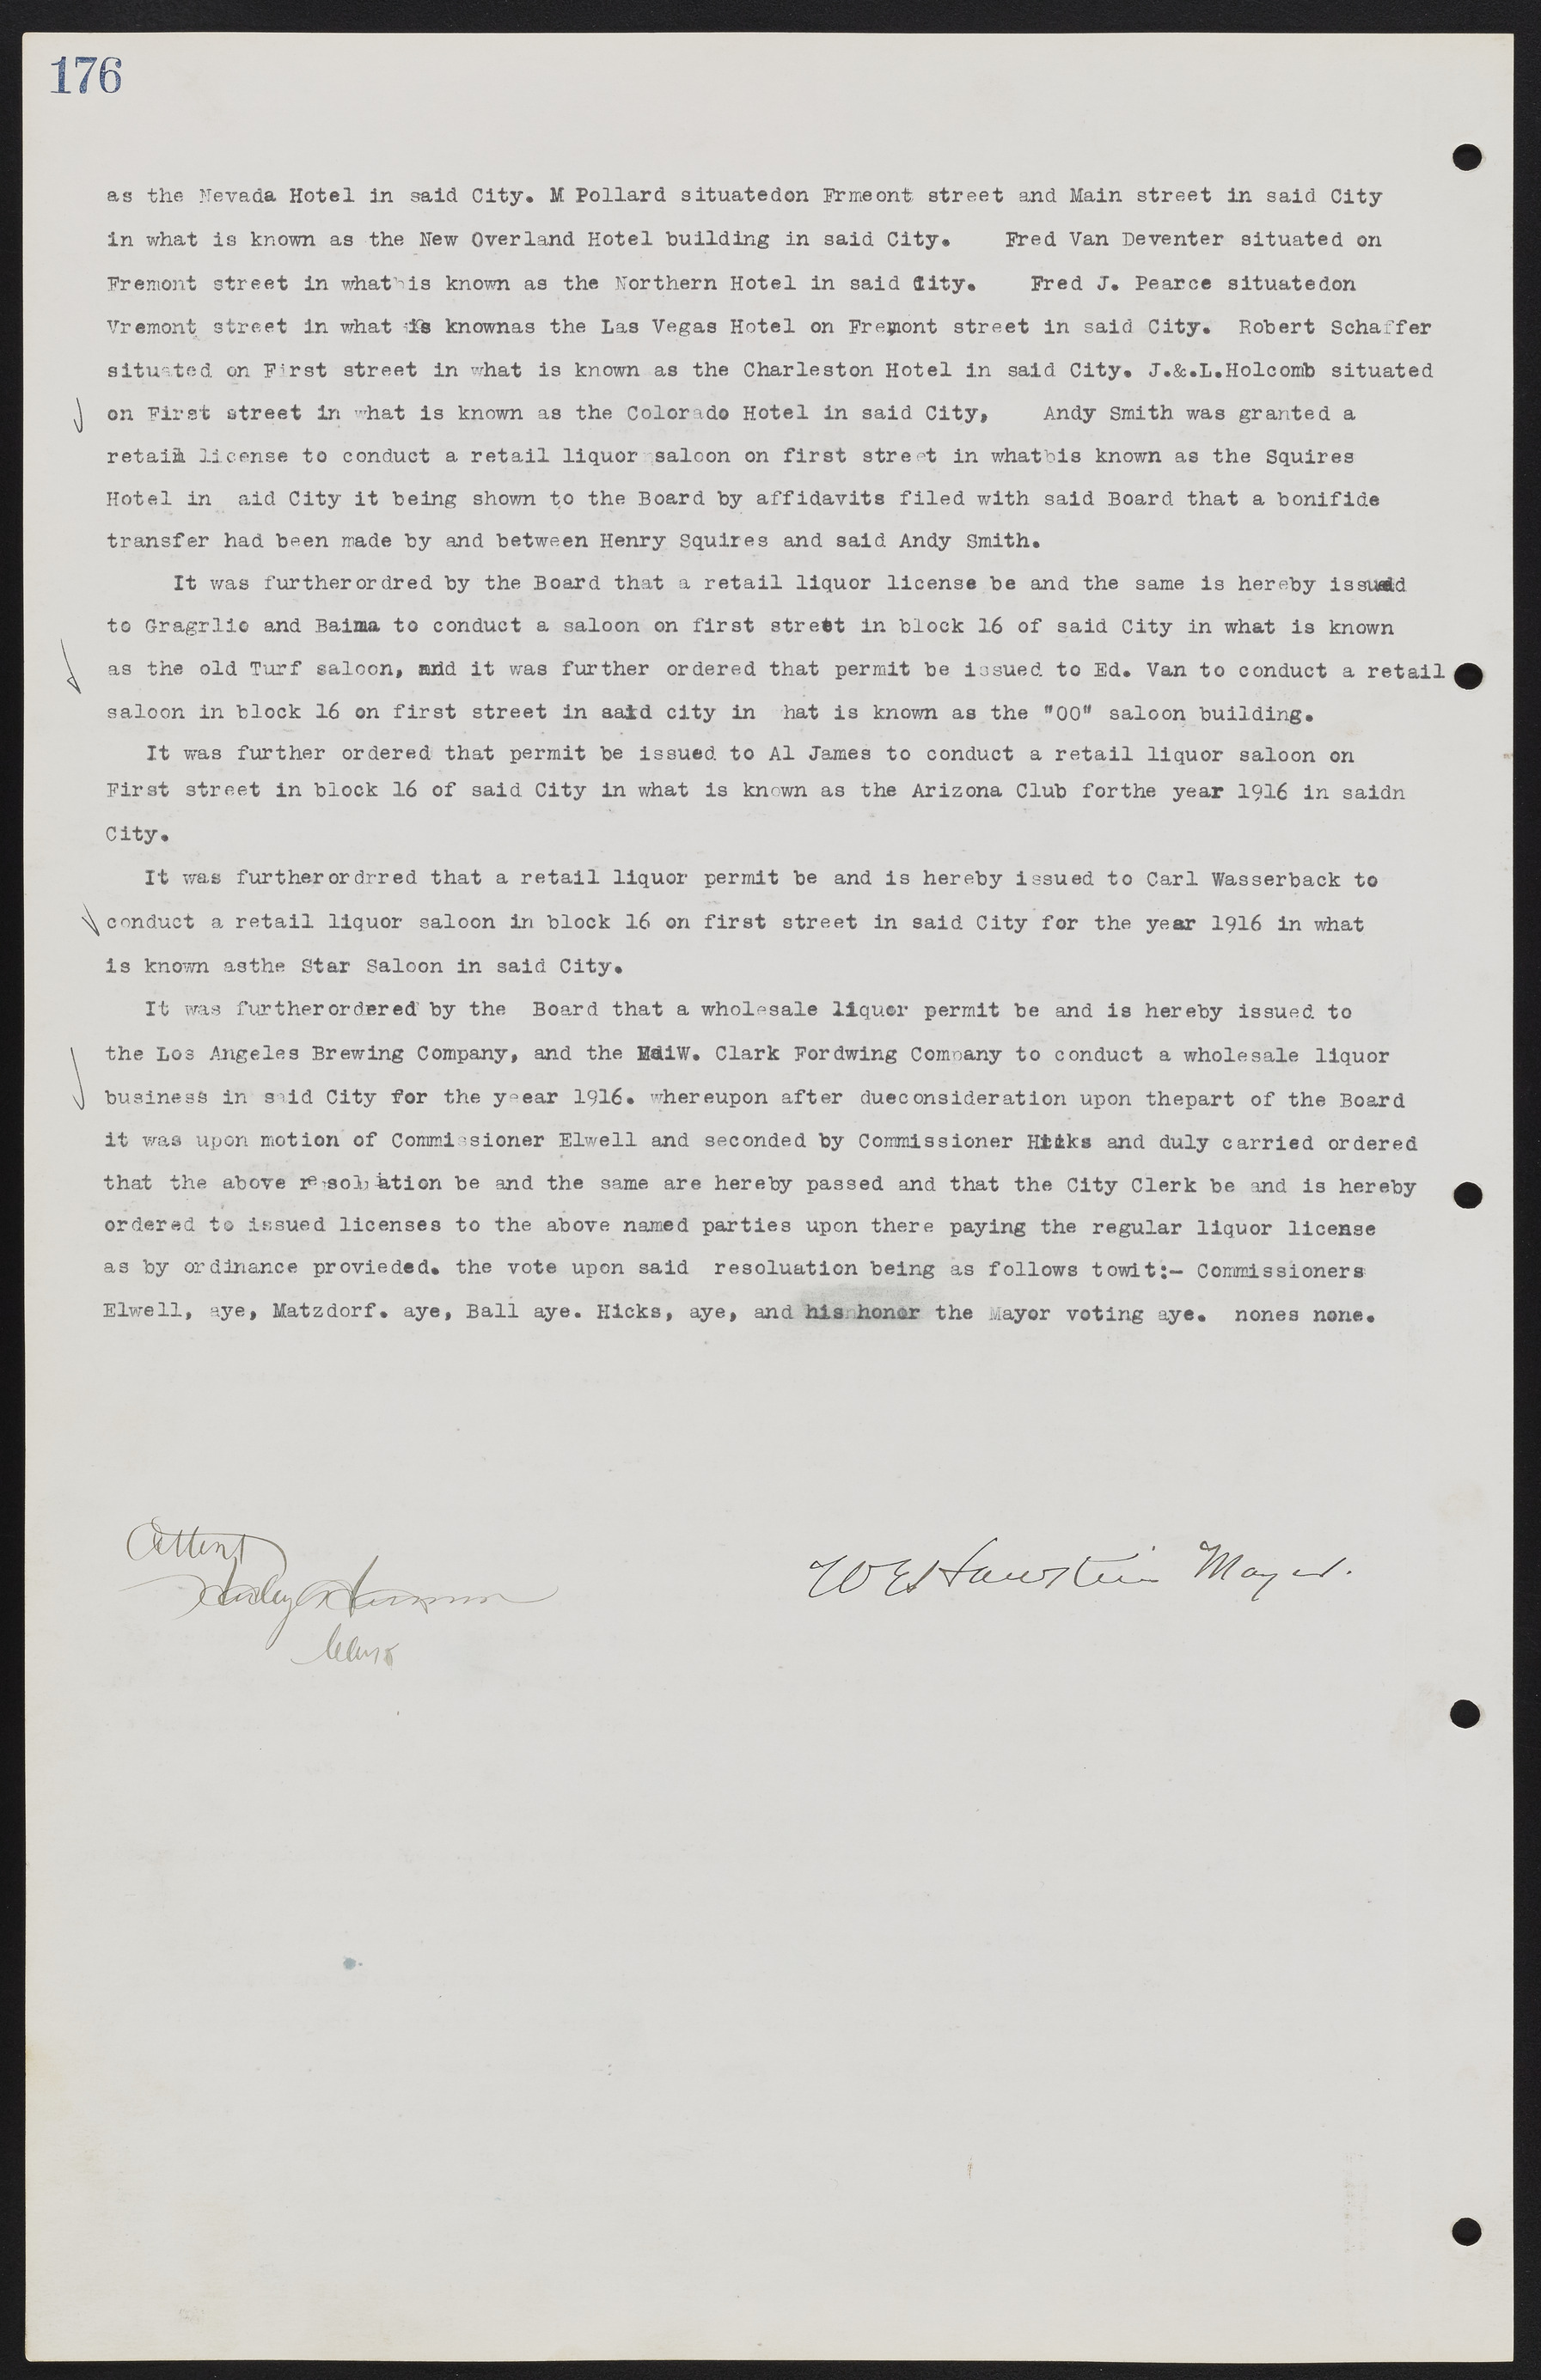 Las Vegas City Commission Minutes, June 22, 1911 to February 7, 1922, lvc000001-192